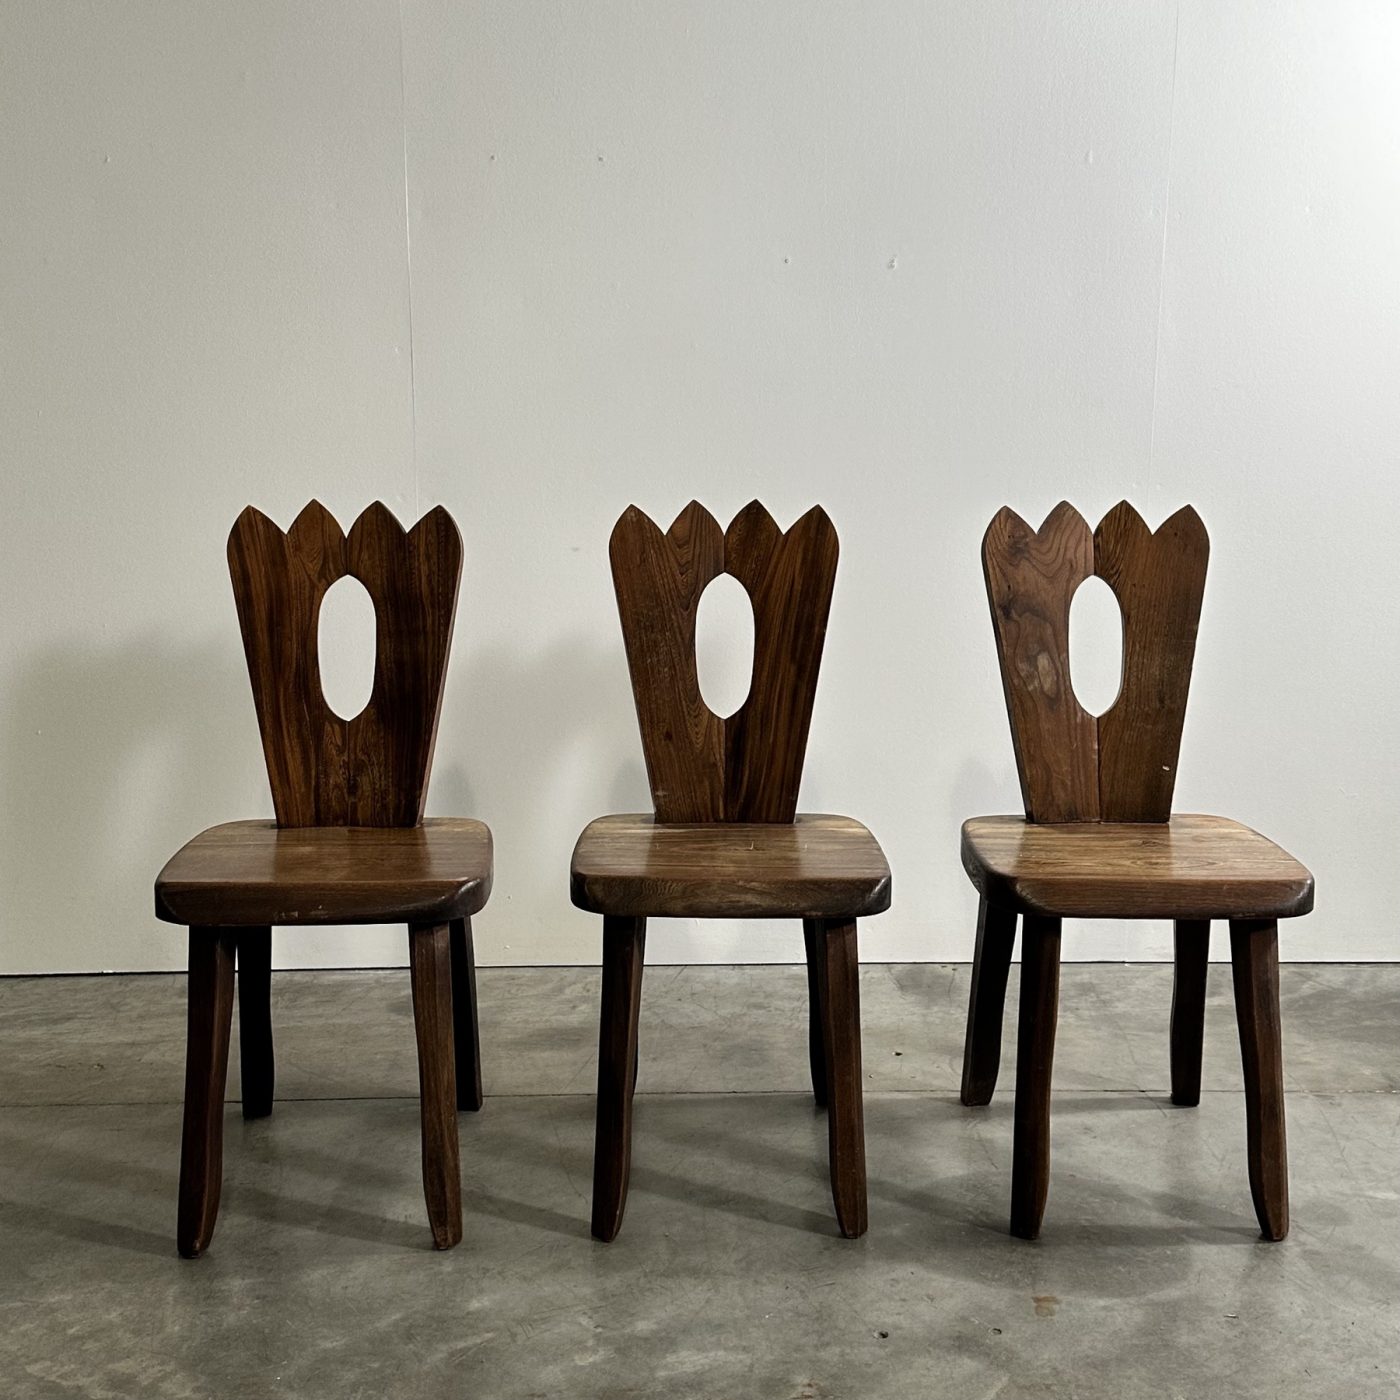 objet-vagabond-brutalist-chairs0002